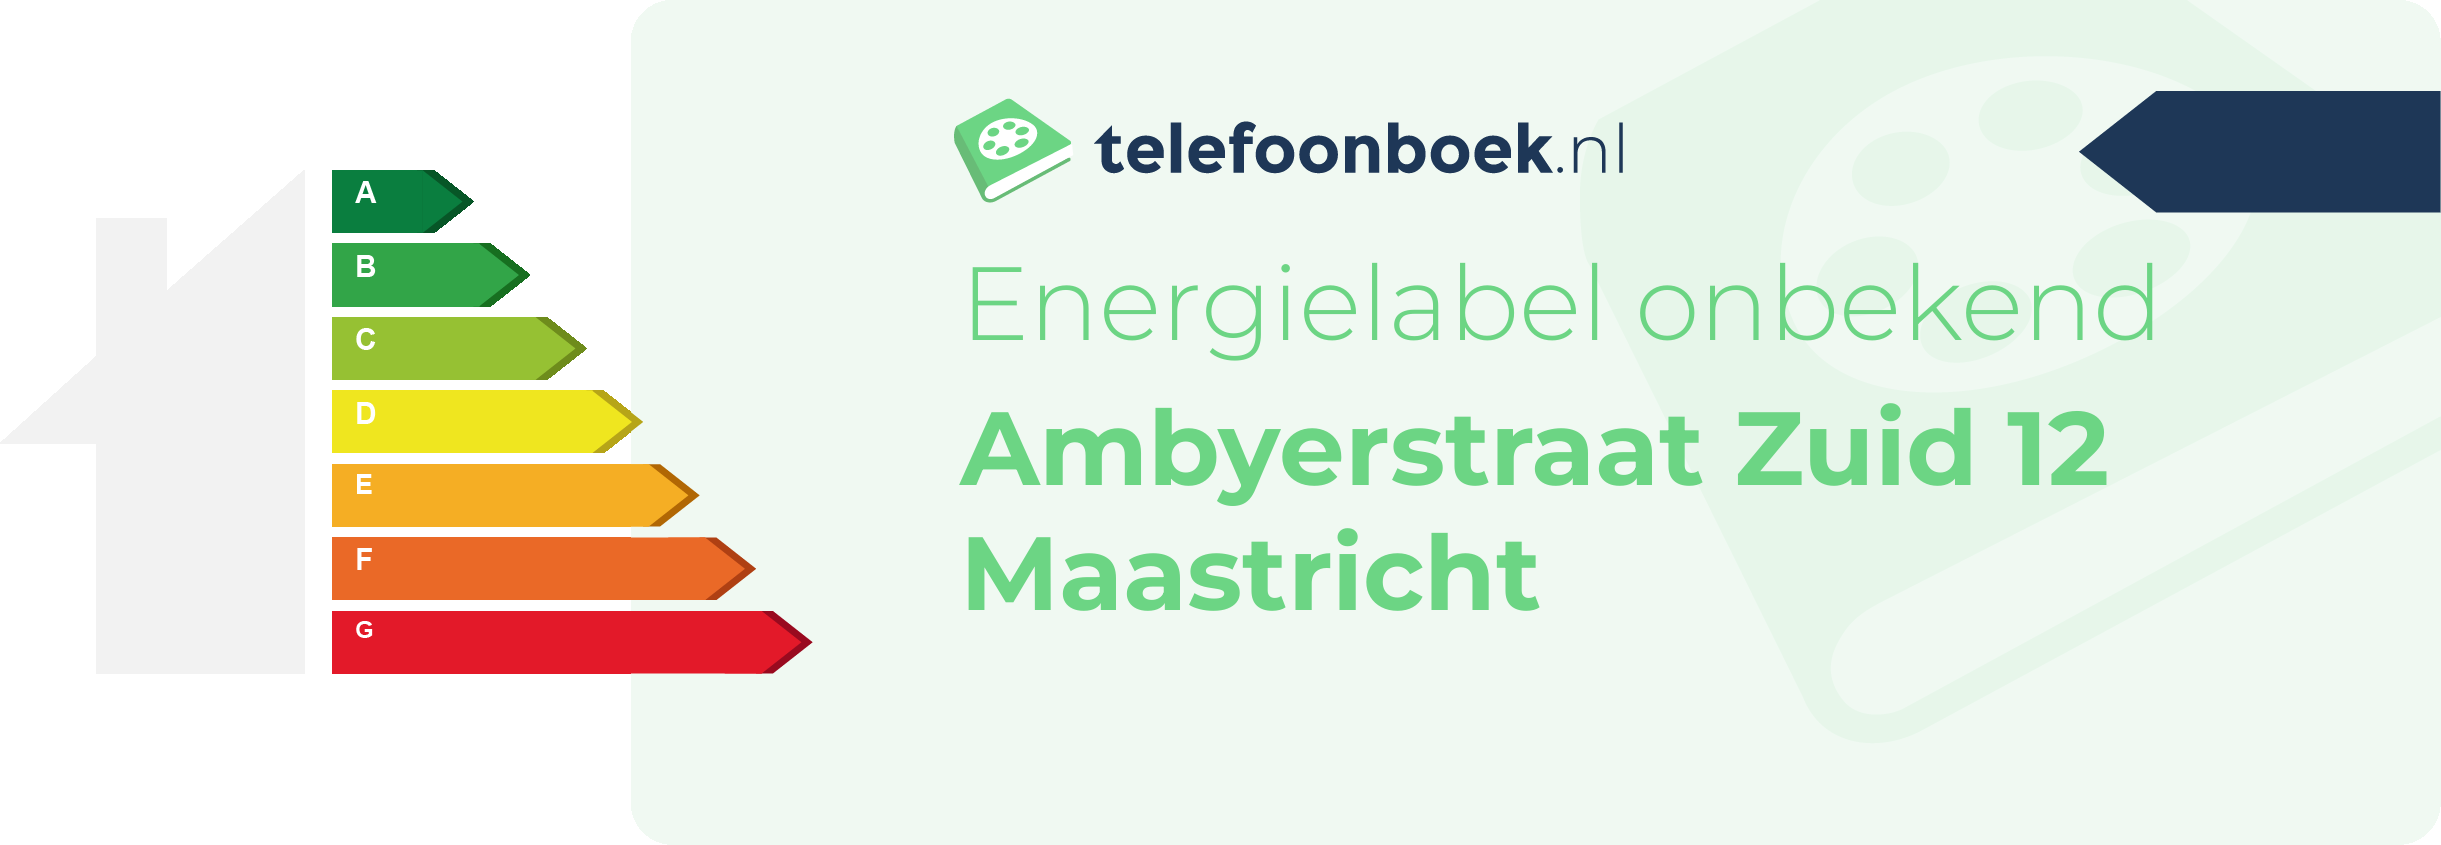 Energielabel Ambyerstraat Zuid 12 Maastricht